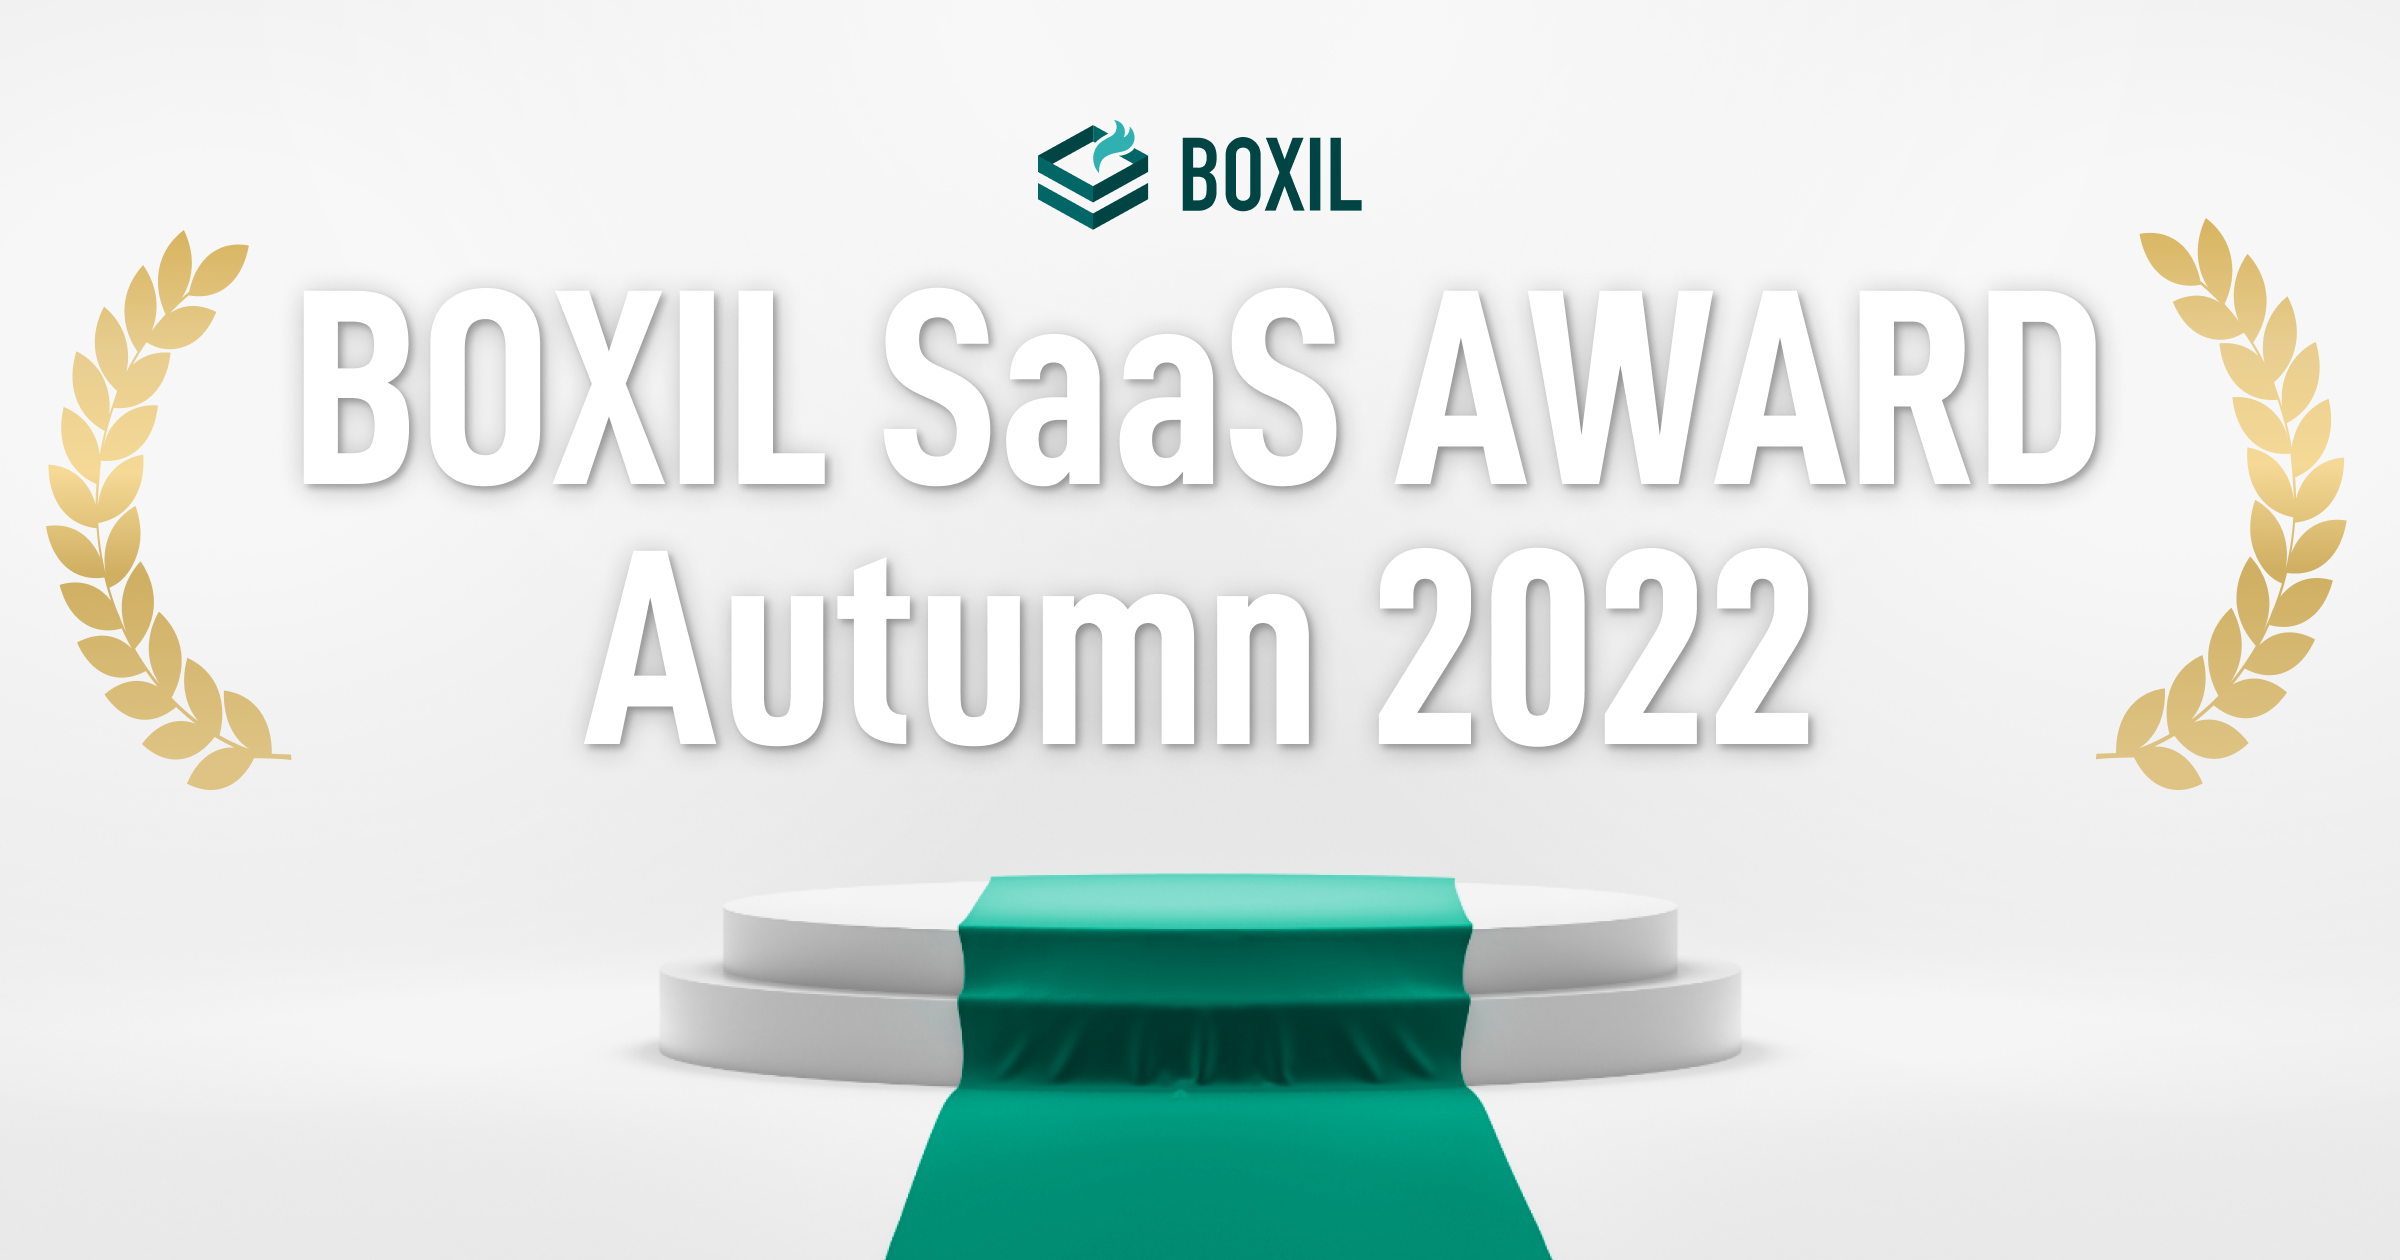 BOXIL SaaS AWARD Autumn 2022_プレスリリース用画像テンプレート1